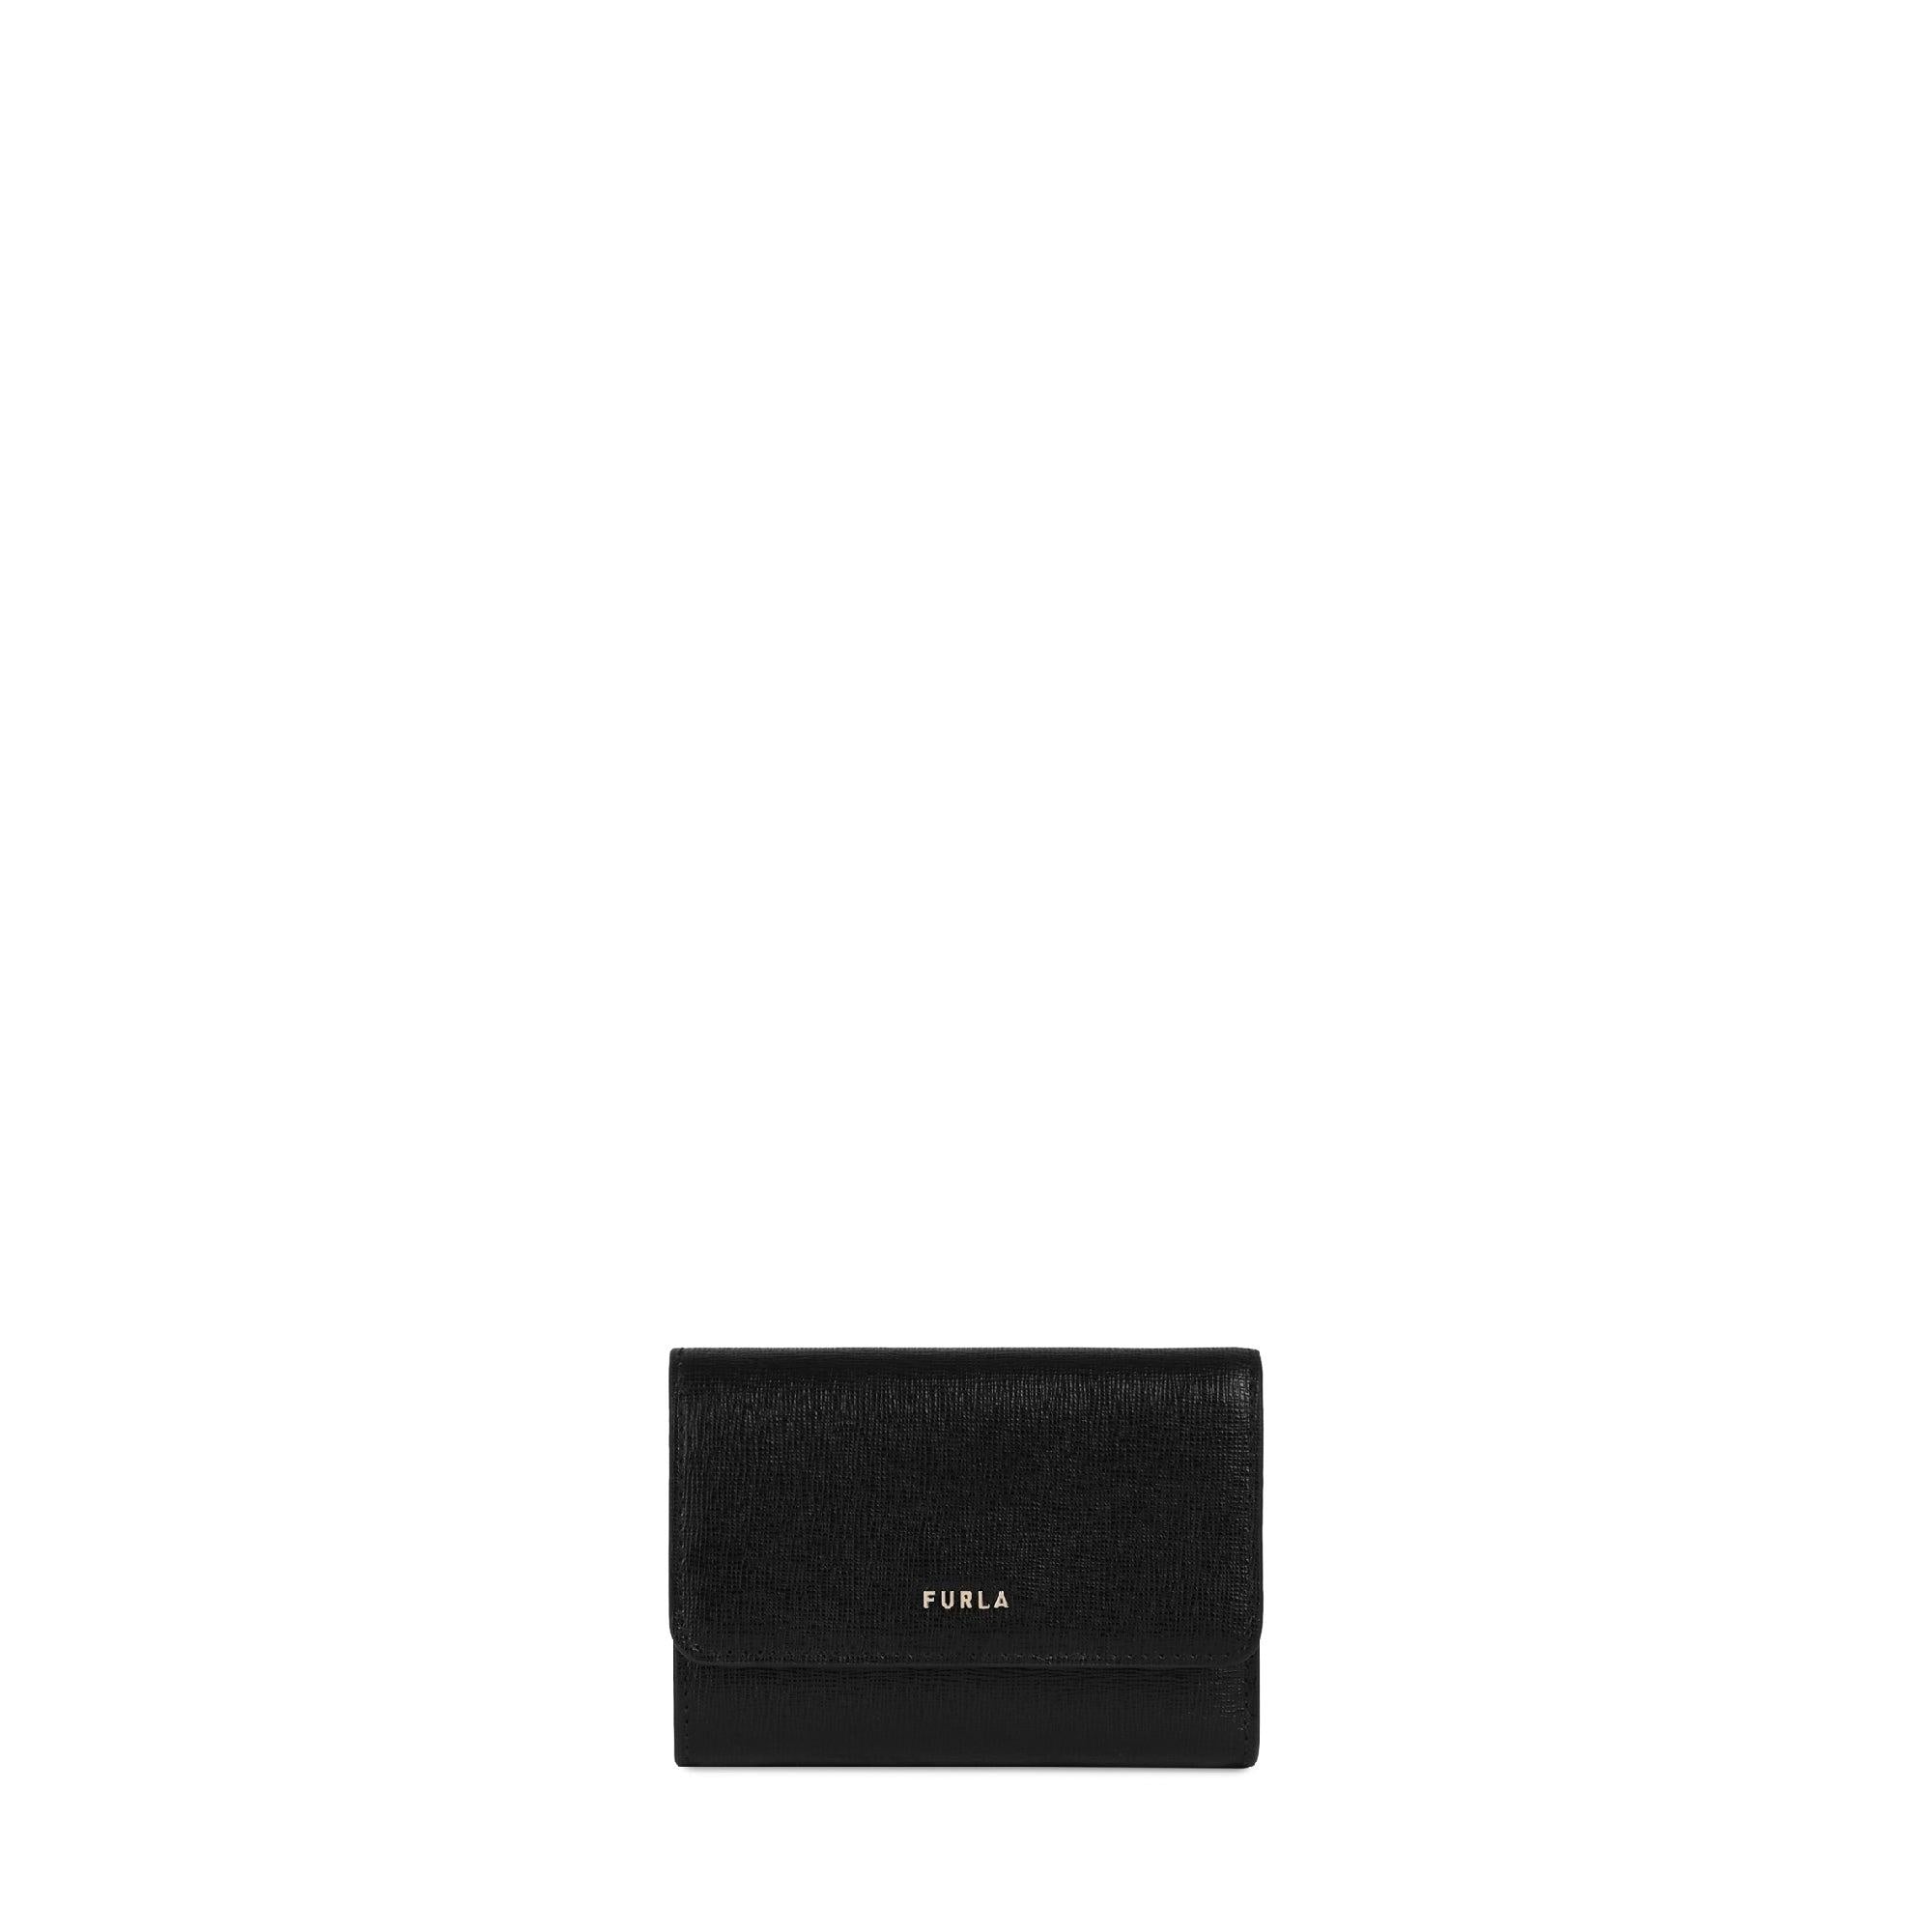 Furla Babylon Compact Black Wallet Trifold - InstaRunway.com